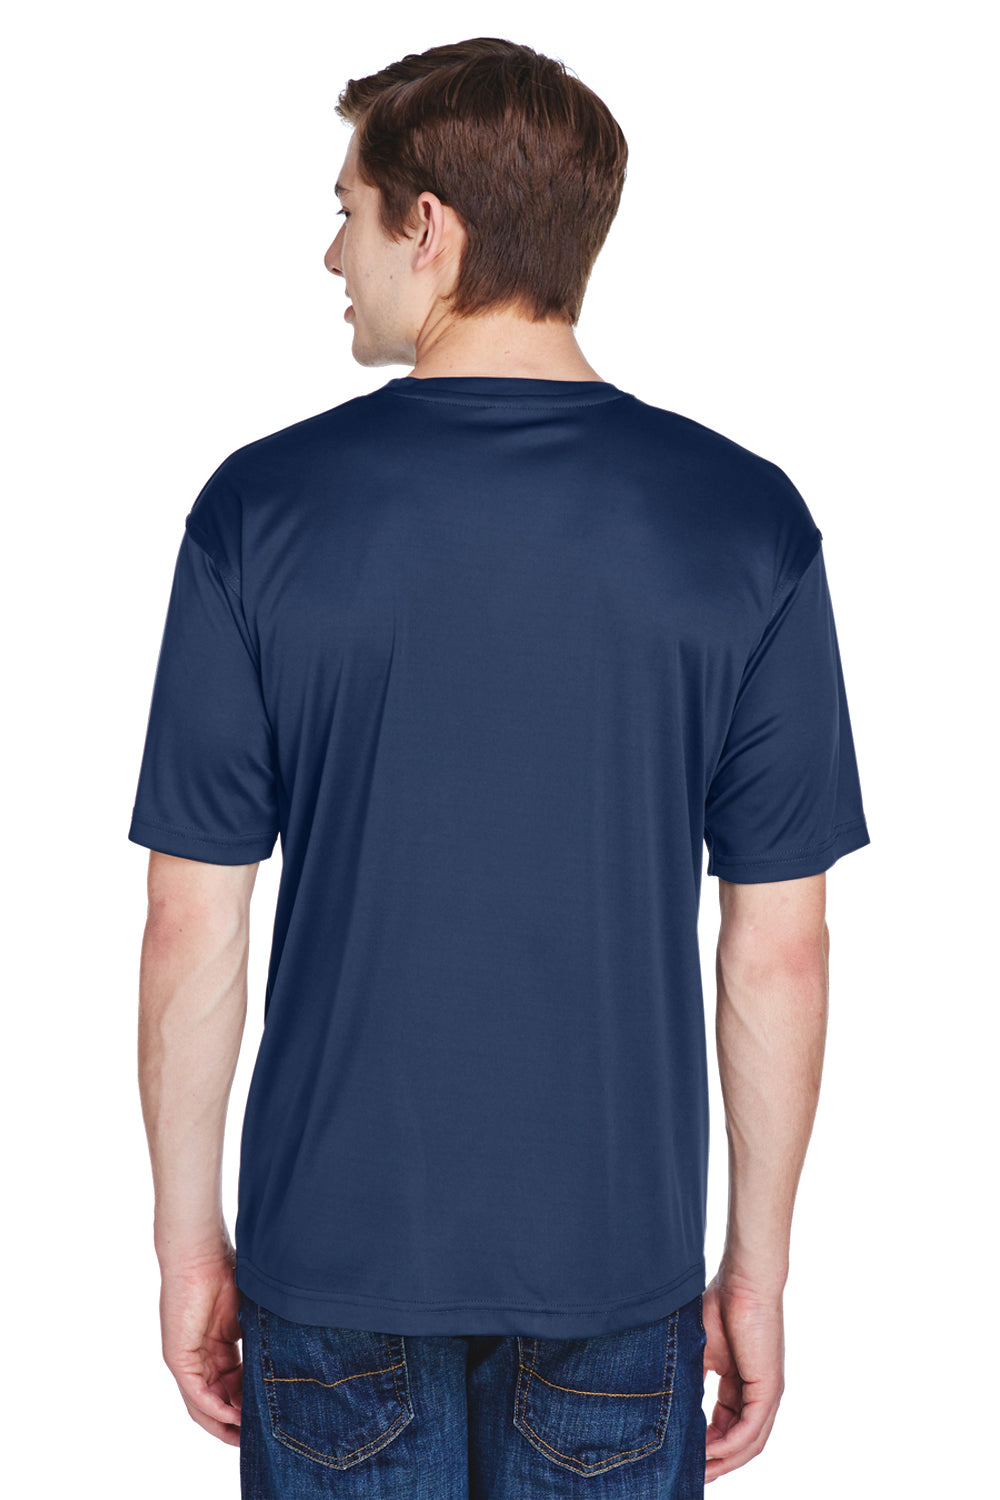 UltraClub 8620 Mens Cool & Dry Performance Moisture Wicking Short Sleeve Crewneck T-Shirt Navy Blue Back